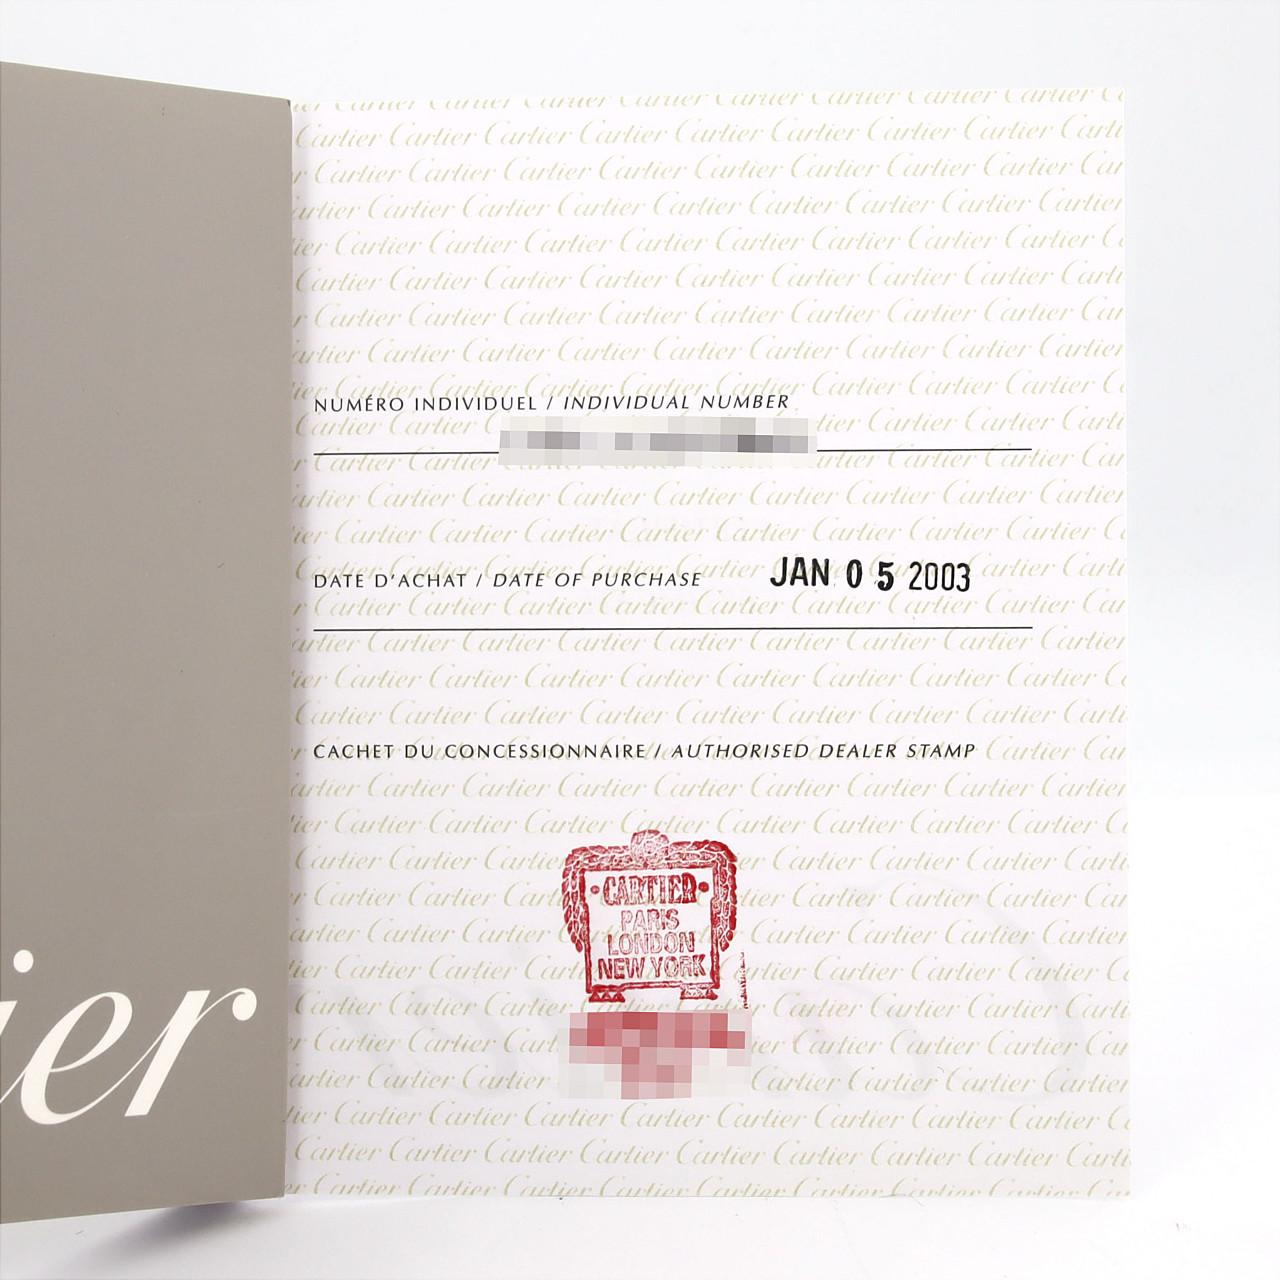 Cartier Panthère SM YG/2D WF3072B9 YG石英